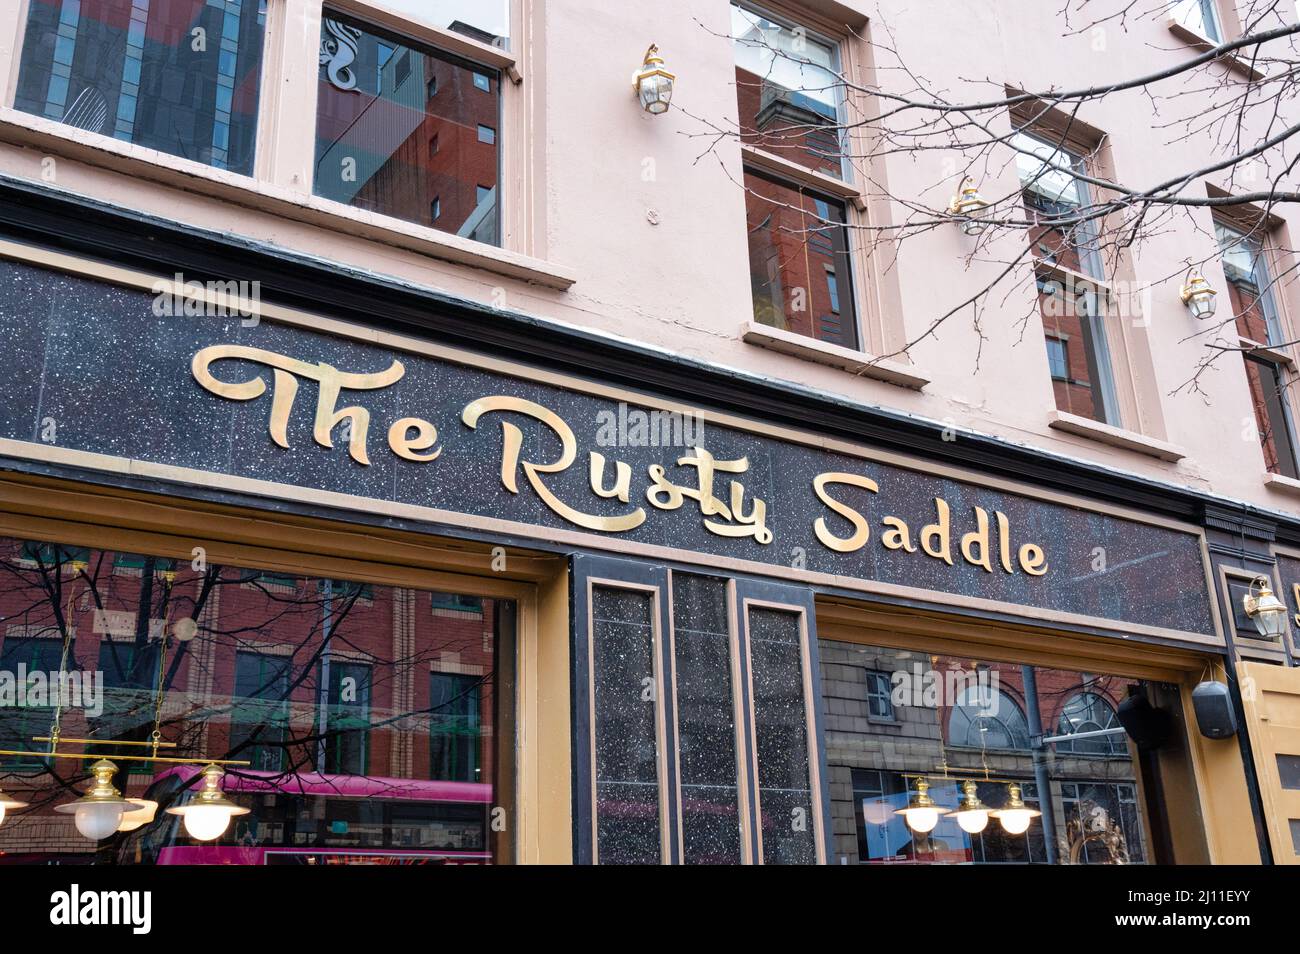 Belfast, UK- Feb 19, 2022: The Rusty Saddle in Belfast Northern Ireland. Stock Photo